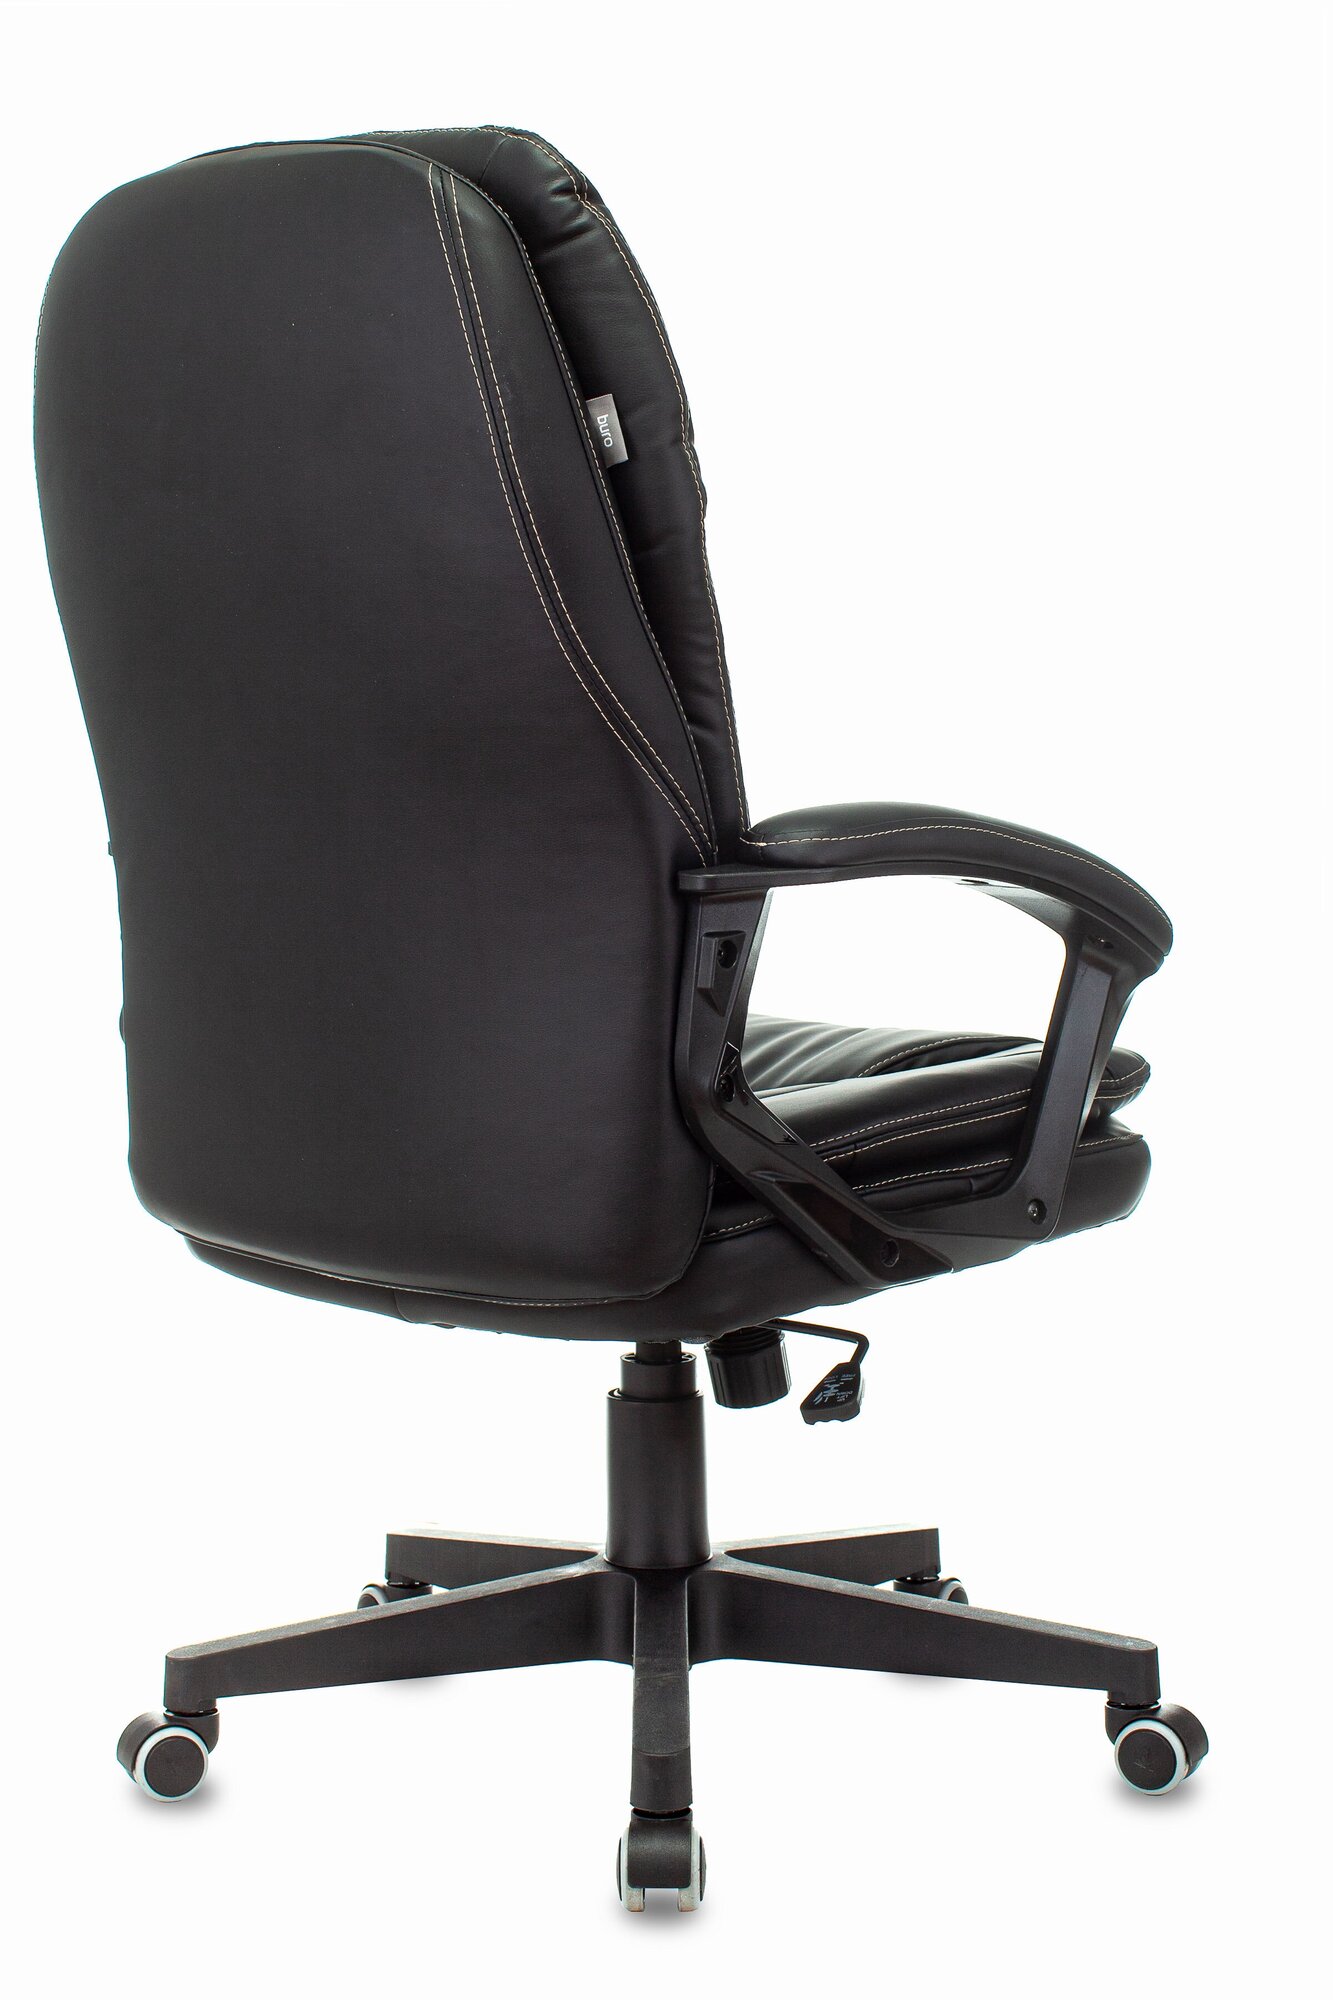 Кресло руководителя Бюрократ CH-868N черный (ch-868n/black)